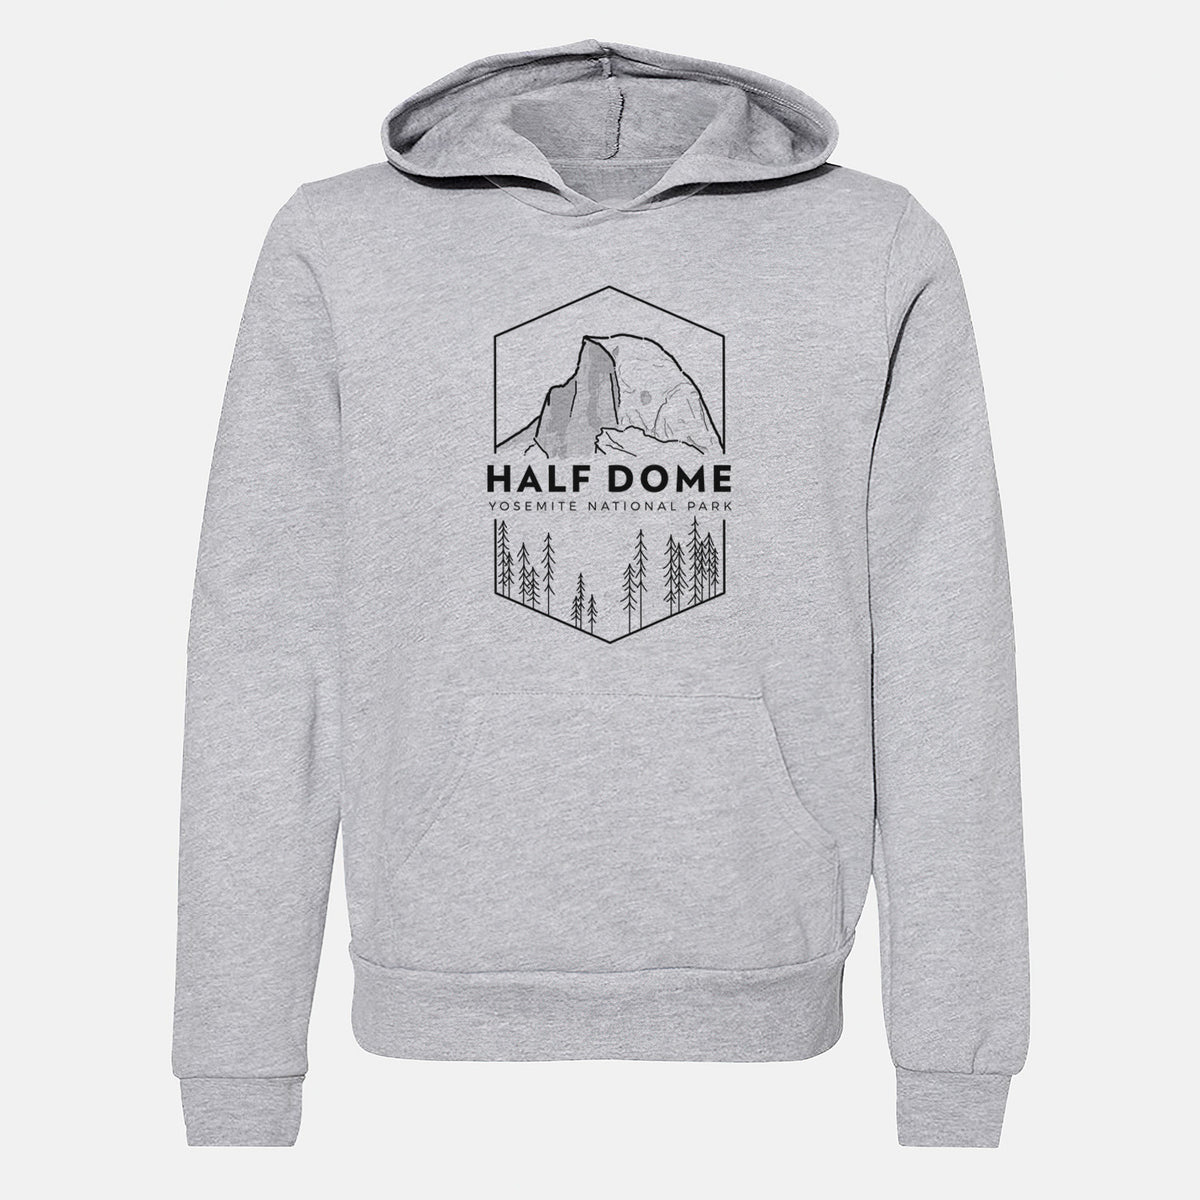 Half Dome - Yosemite National Park - Youth Hoodie Sweatshirt